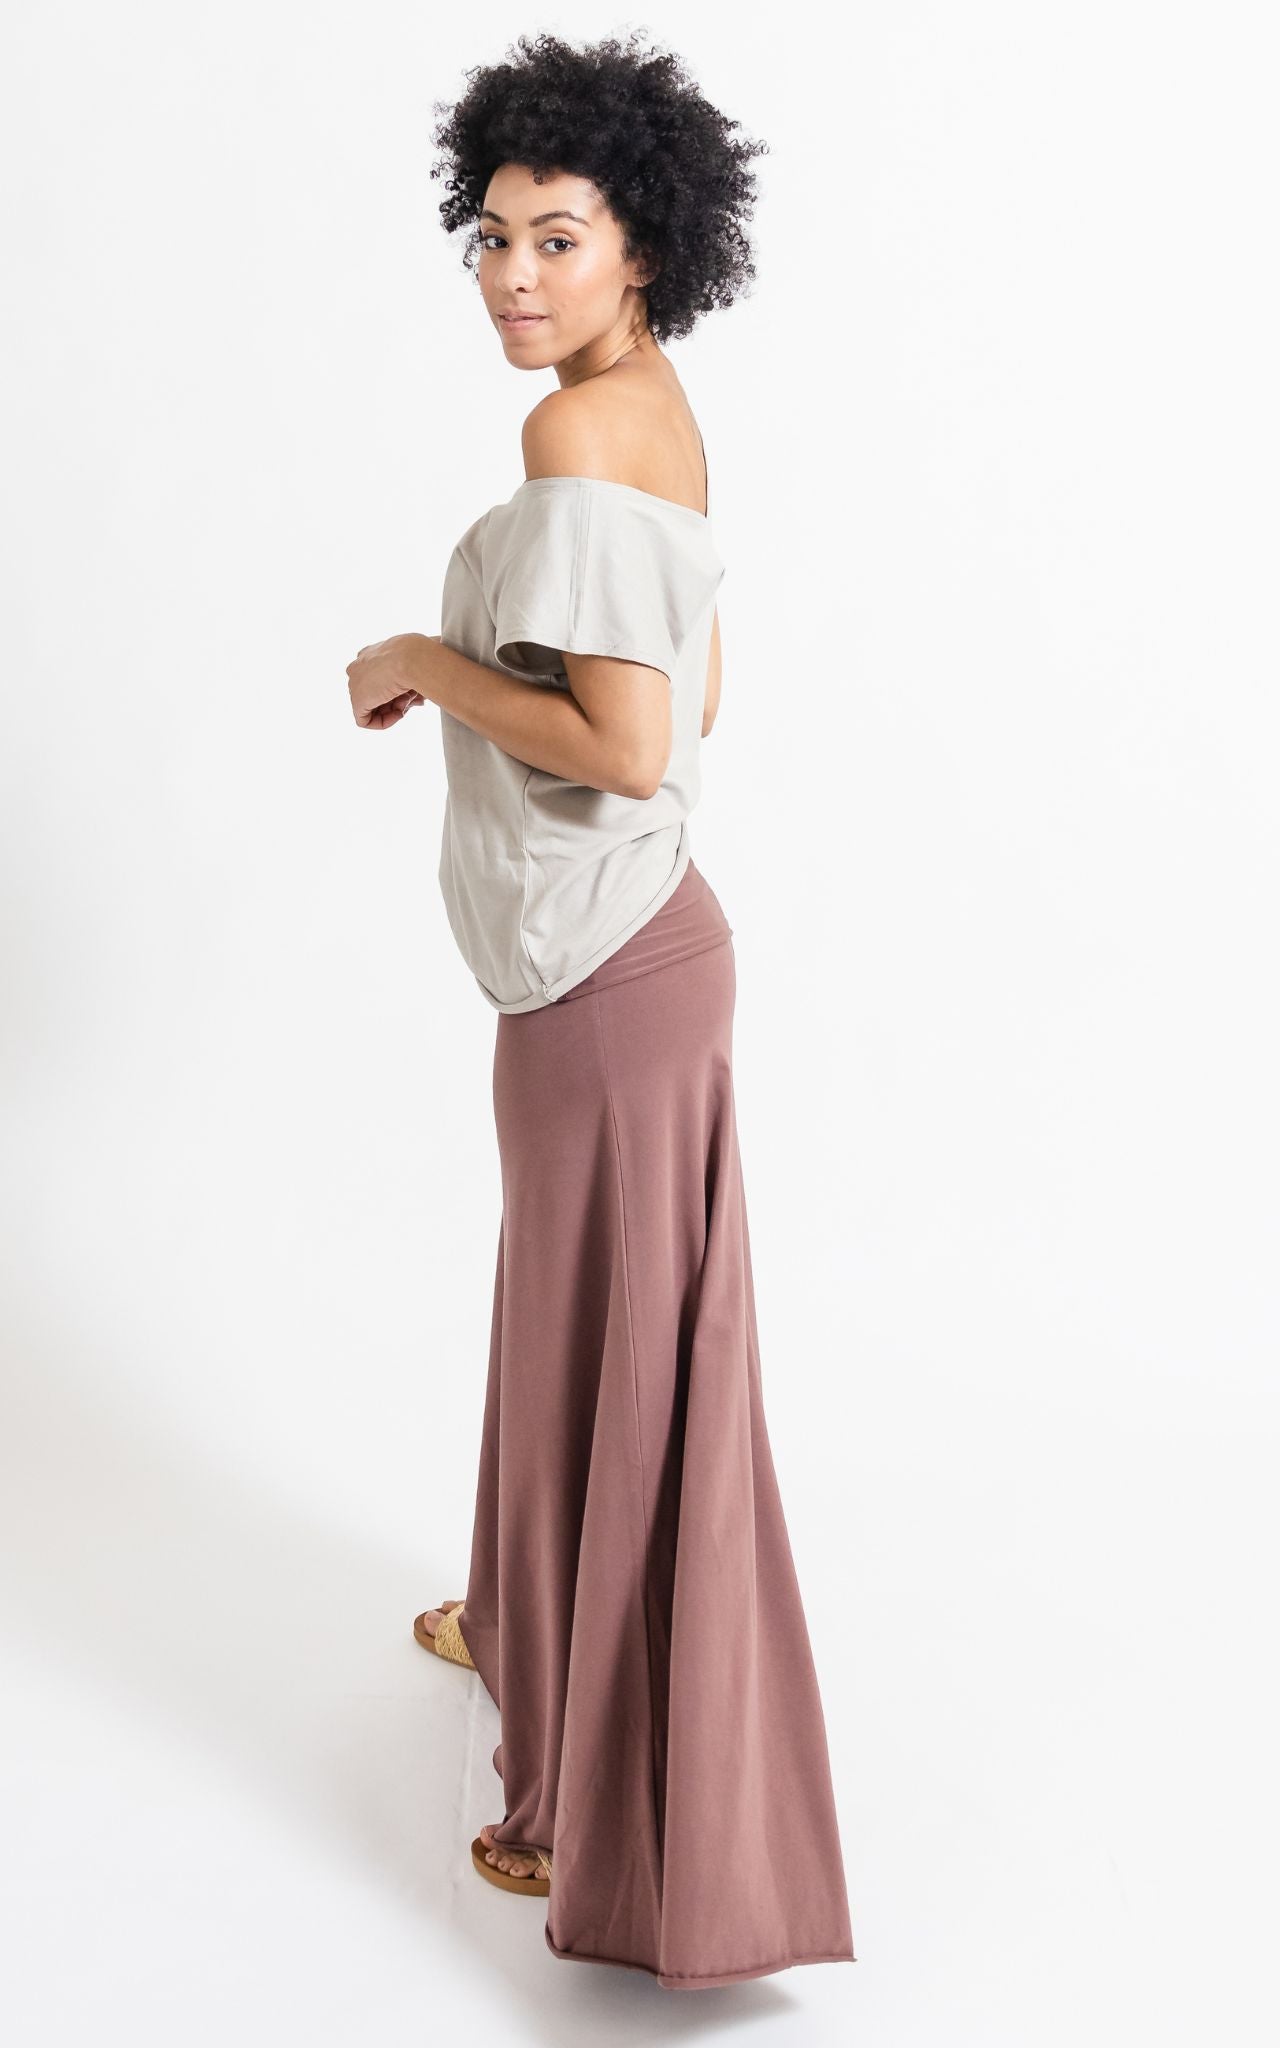 Surya Australia Ethical Organic Cotton Skirt made in Nepal - Dusty Mauve